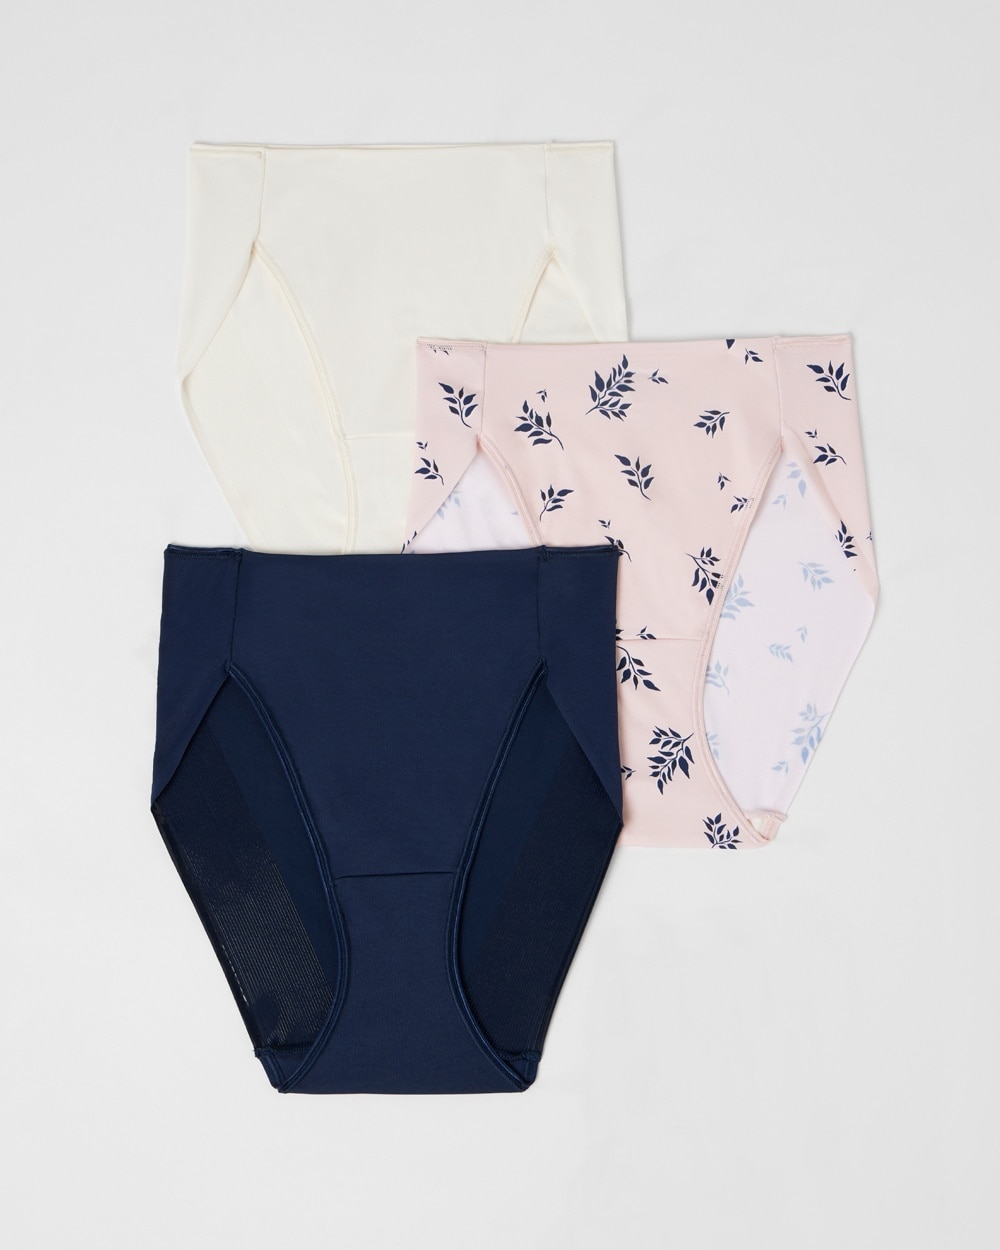 My new favorite underwear!” - Our NEW Silhouette Brief is a hit - Honeylove